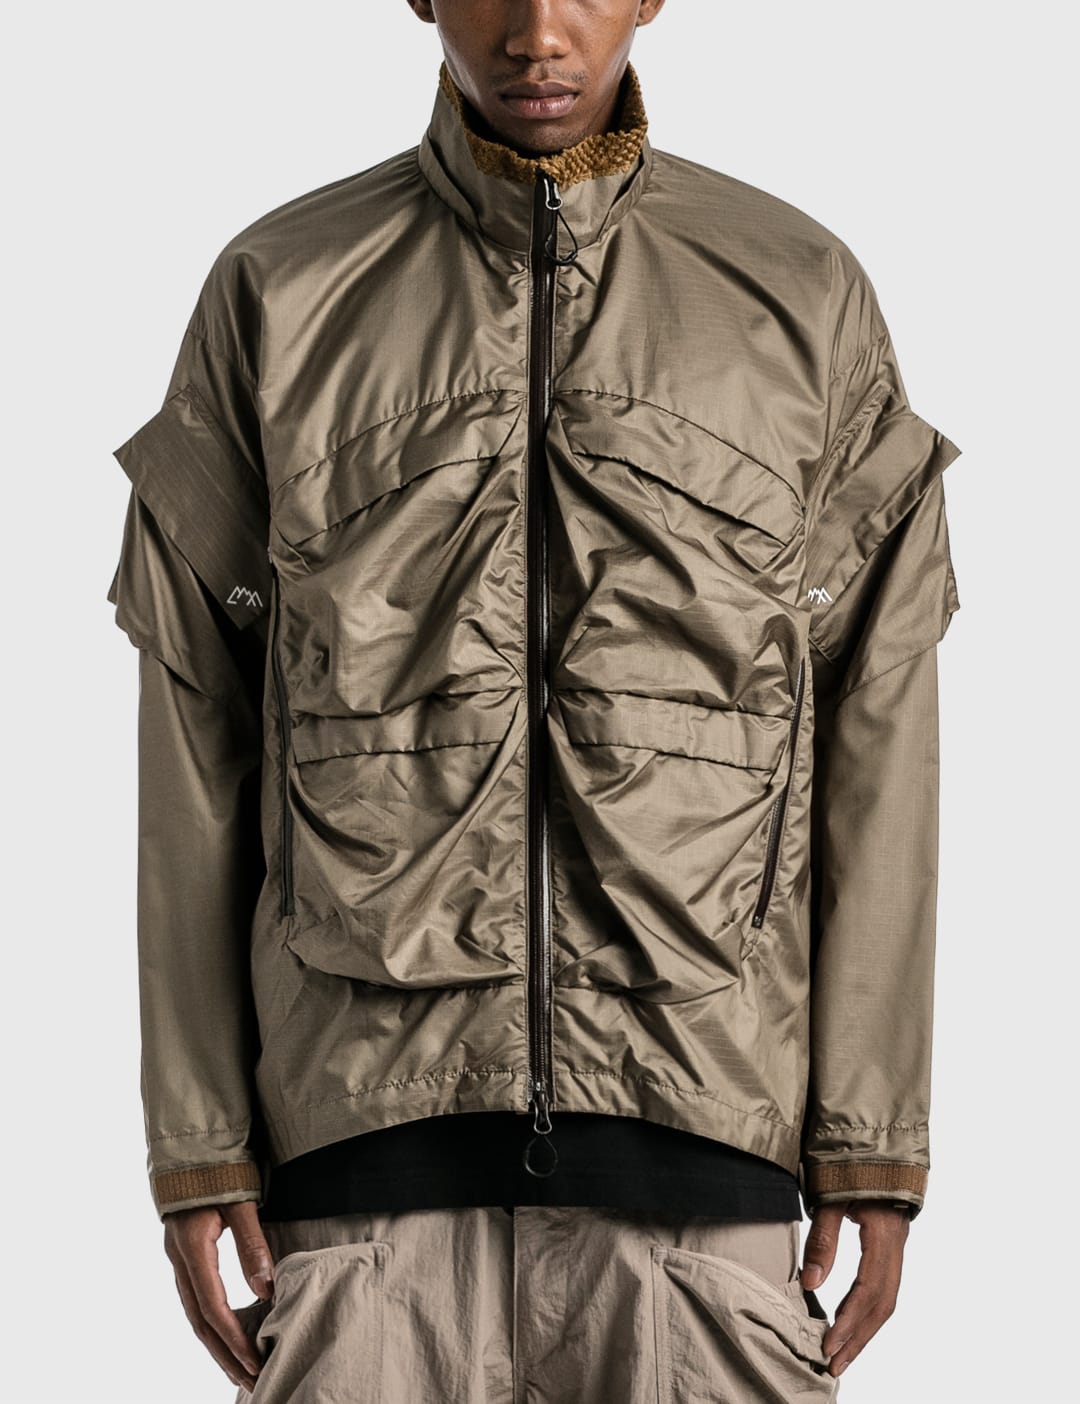 Comfy Outdoor Garment - Sling Shot MOD Jacket | HBX - Globally